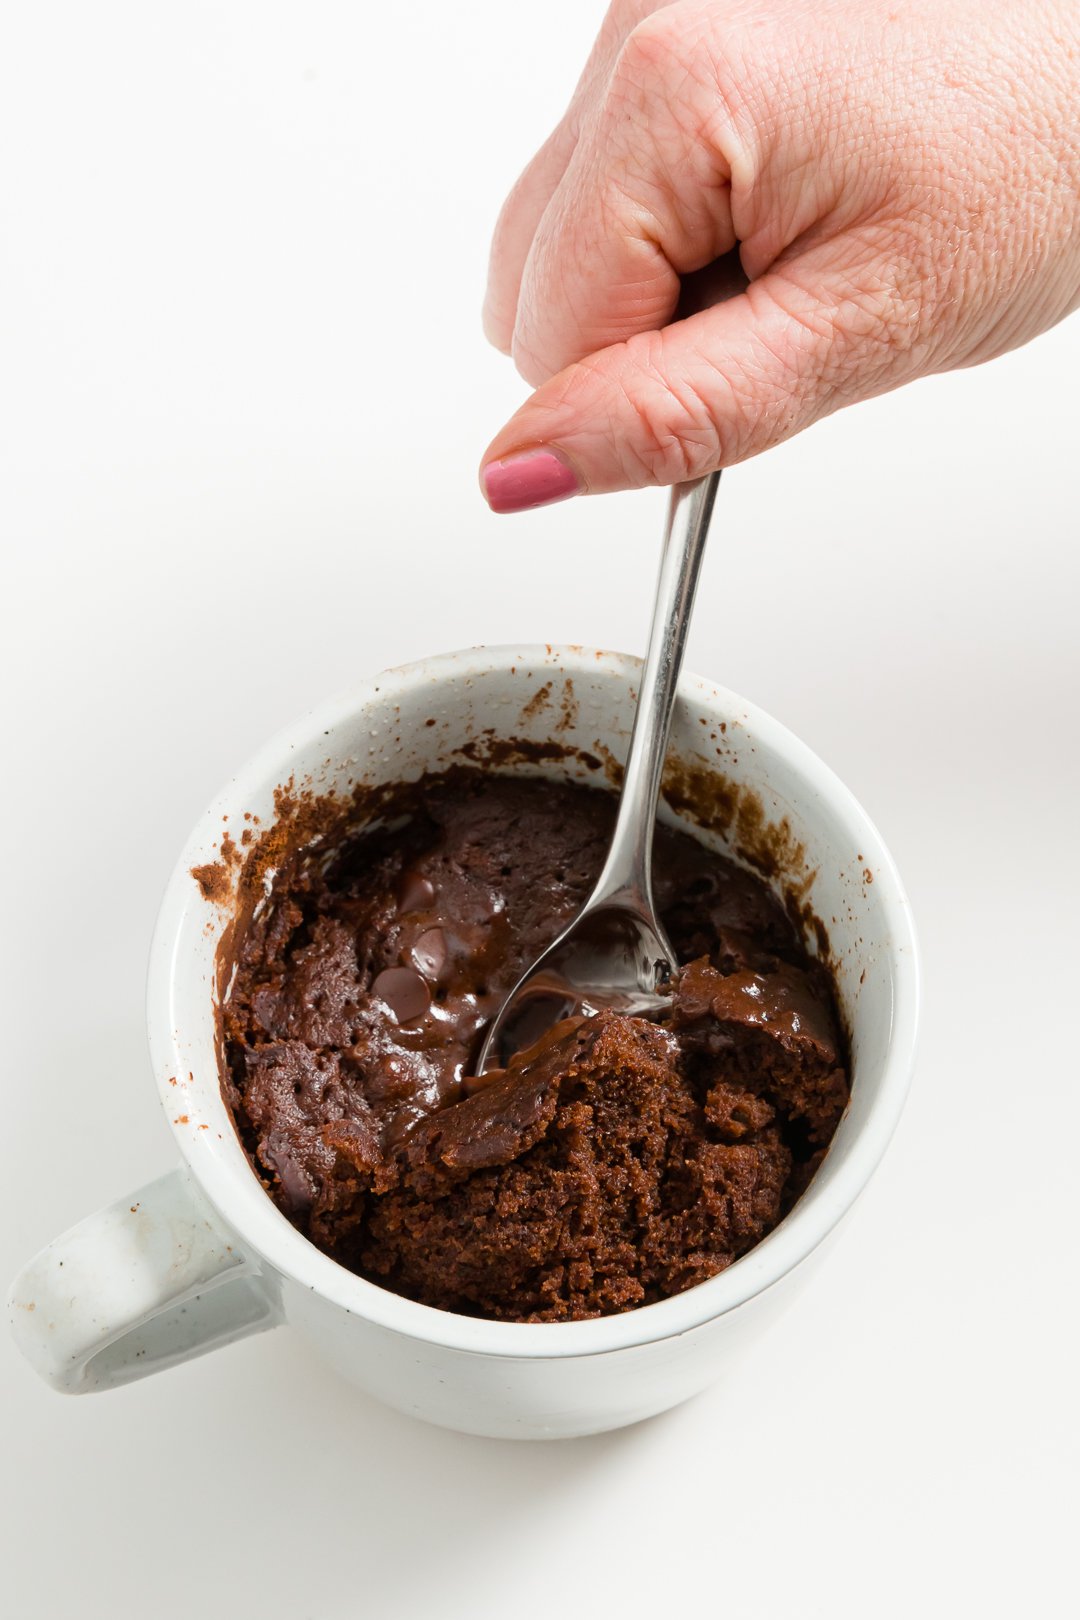 Getting a spoonful of chocolate mug cake